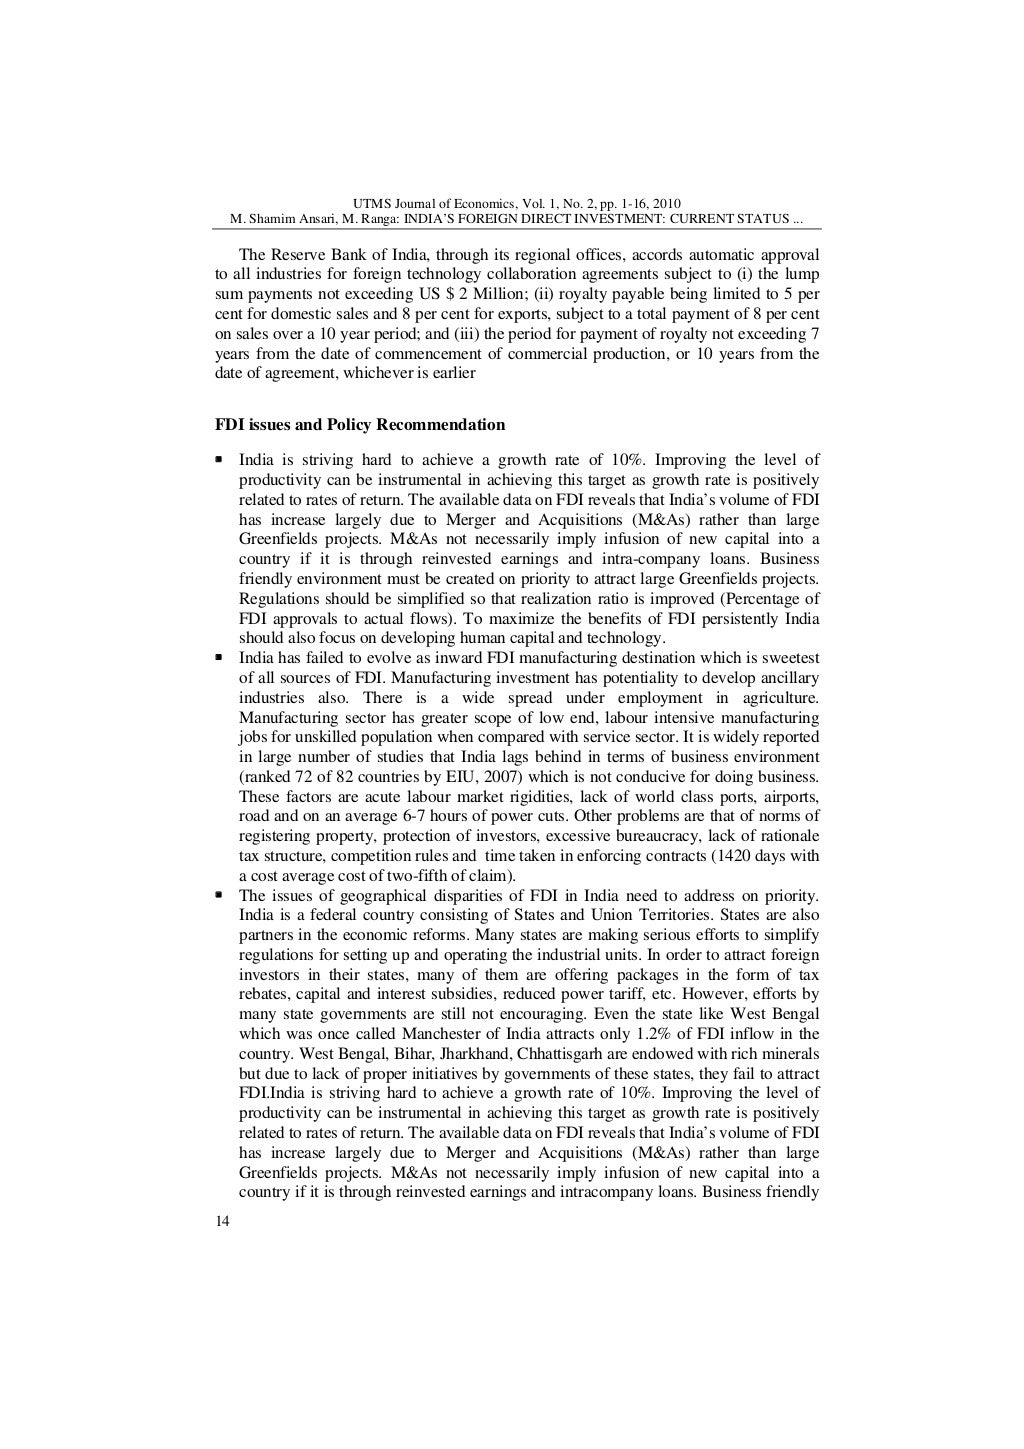 research paper on fdi in india